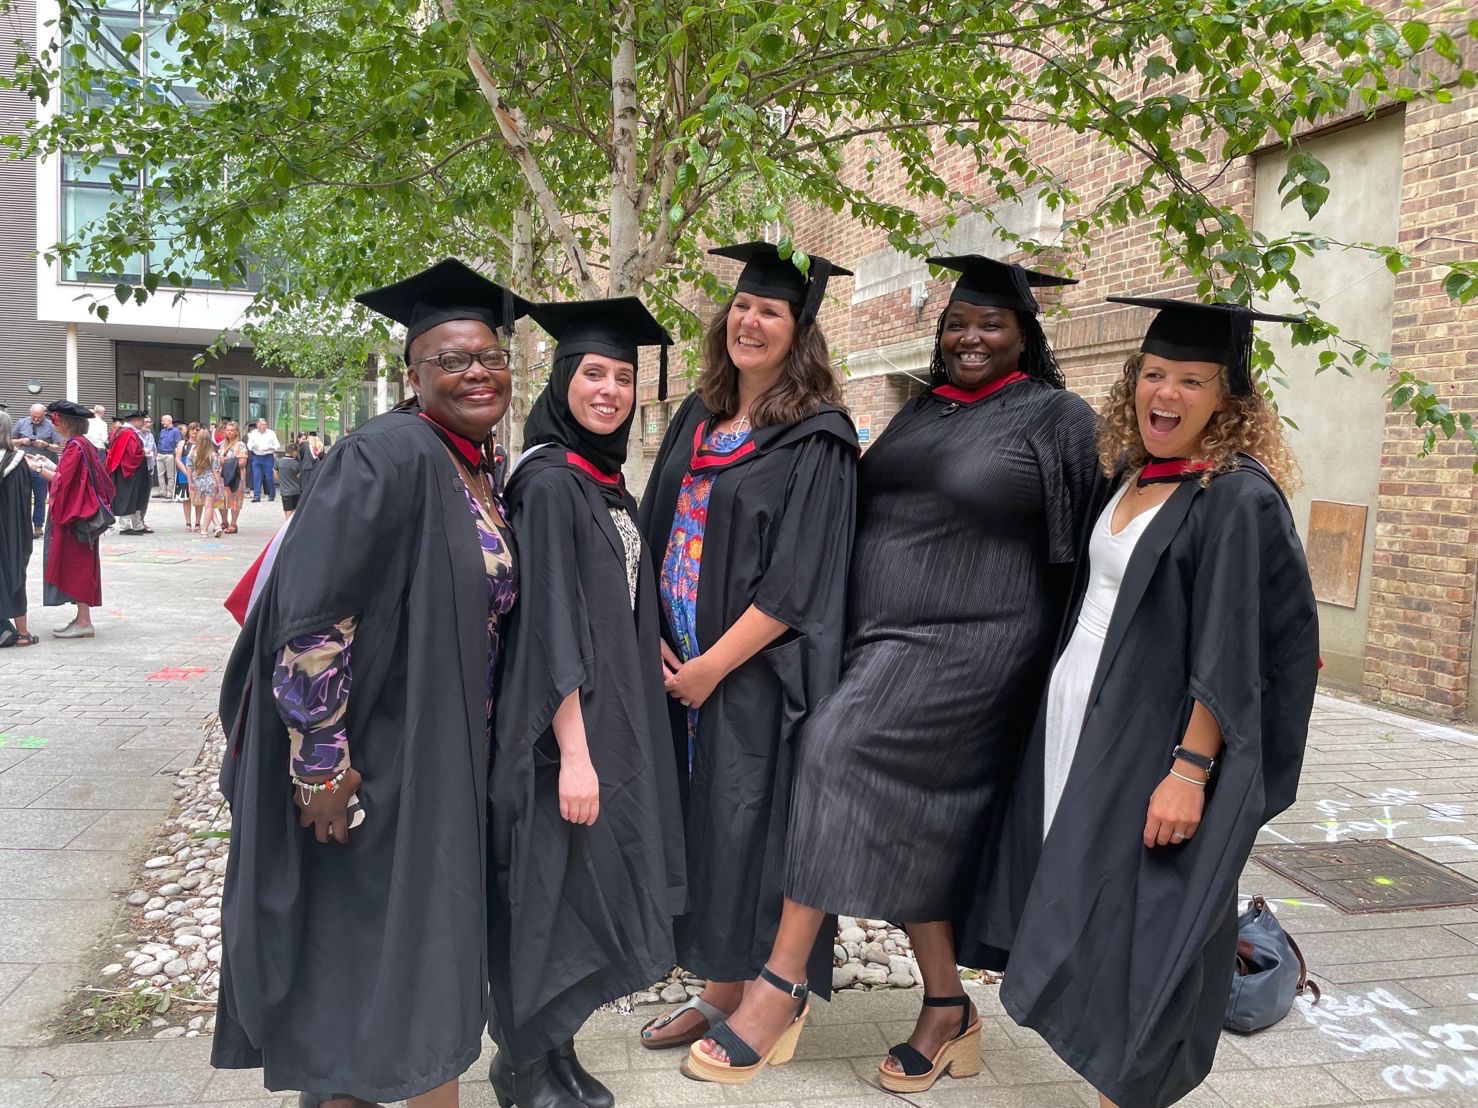 A diverse group of women graduates outside a university building. 